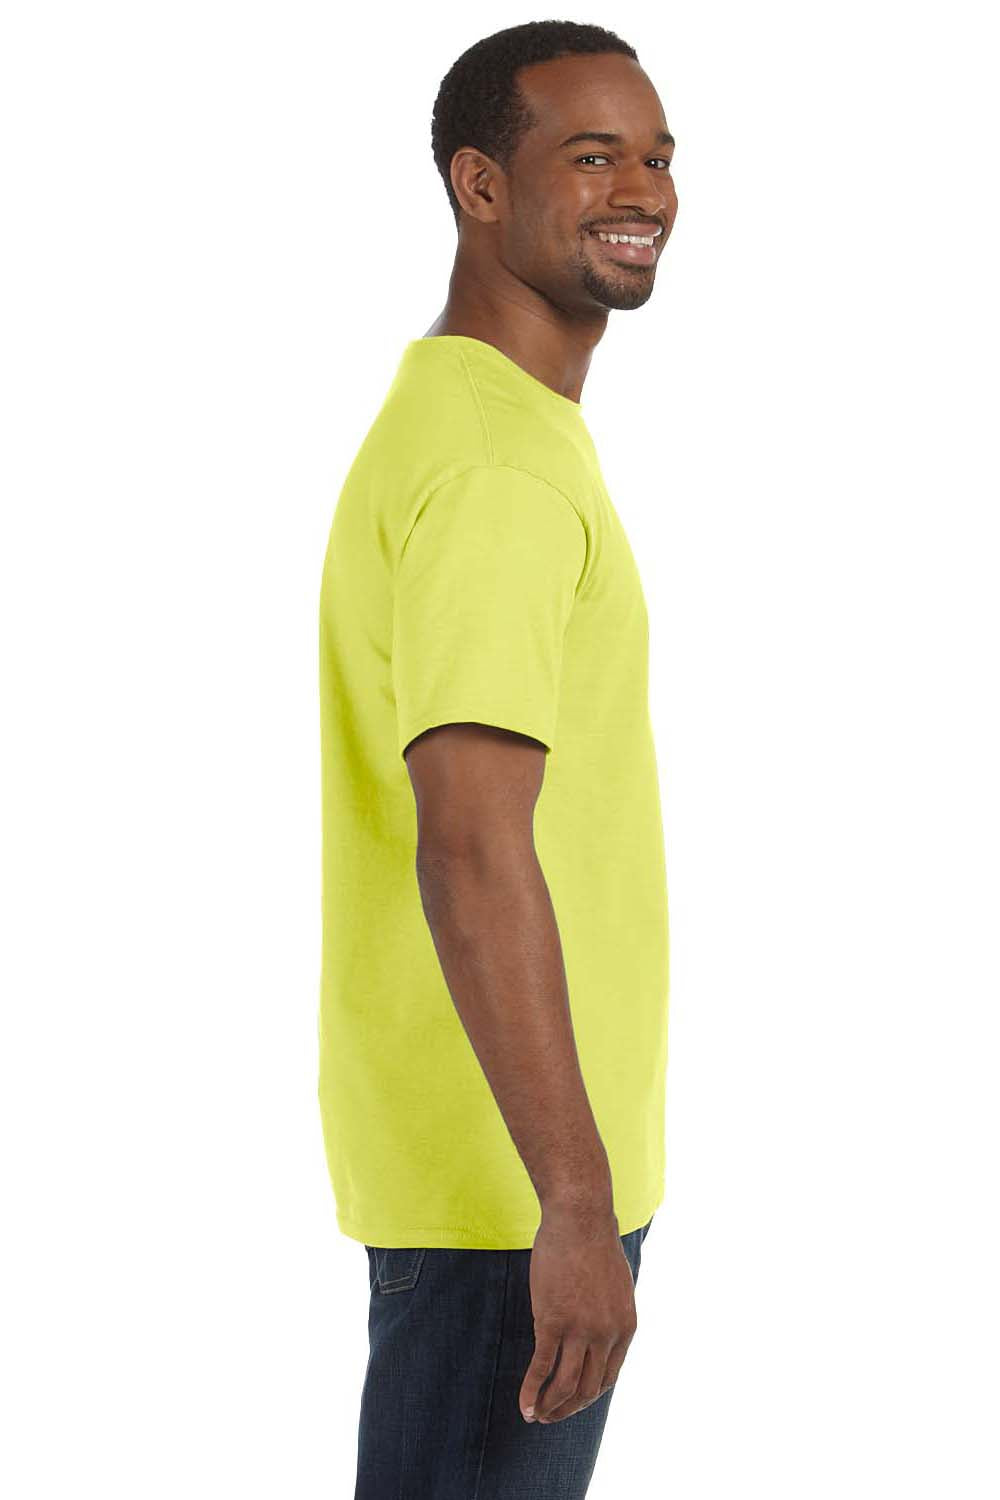 Jerzees 29M Mens Dri-Power Moisture Wicking Short Sleeve Crewneck T-Shirt Safety Green Side